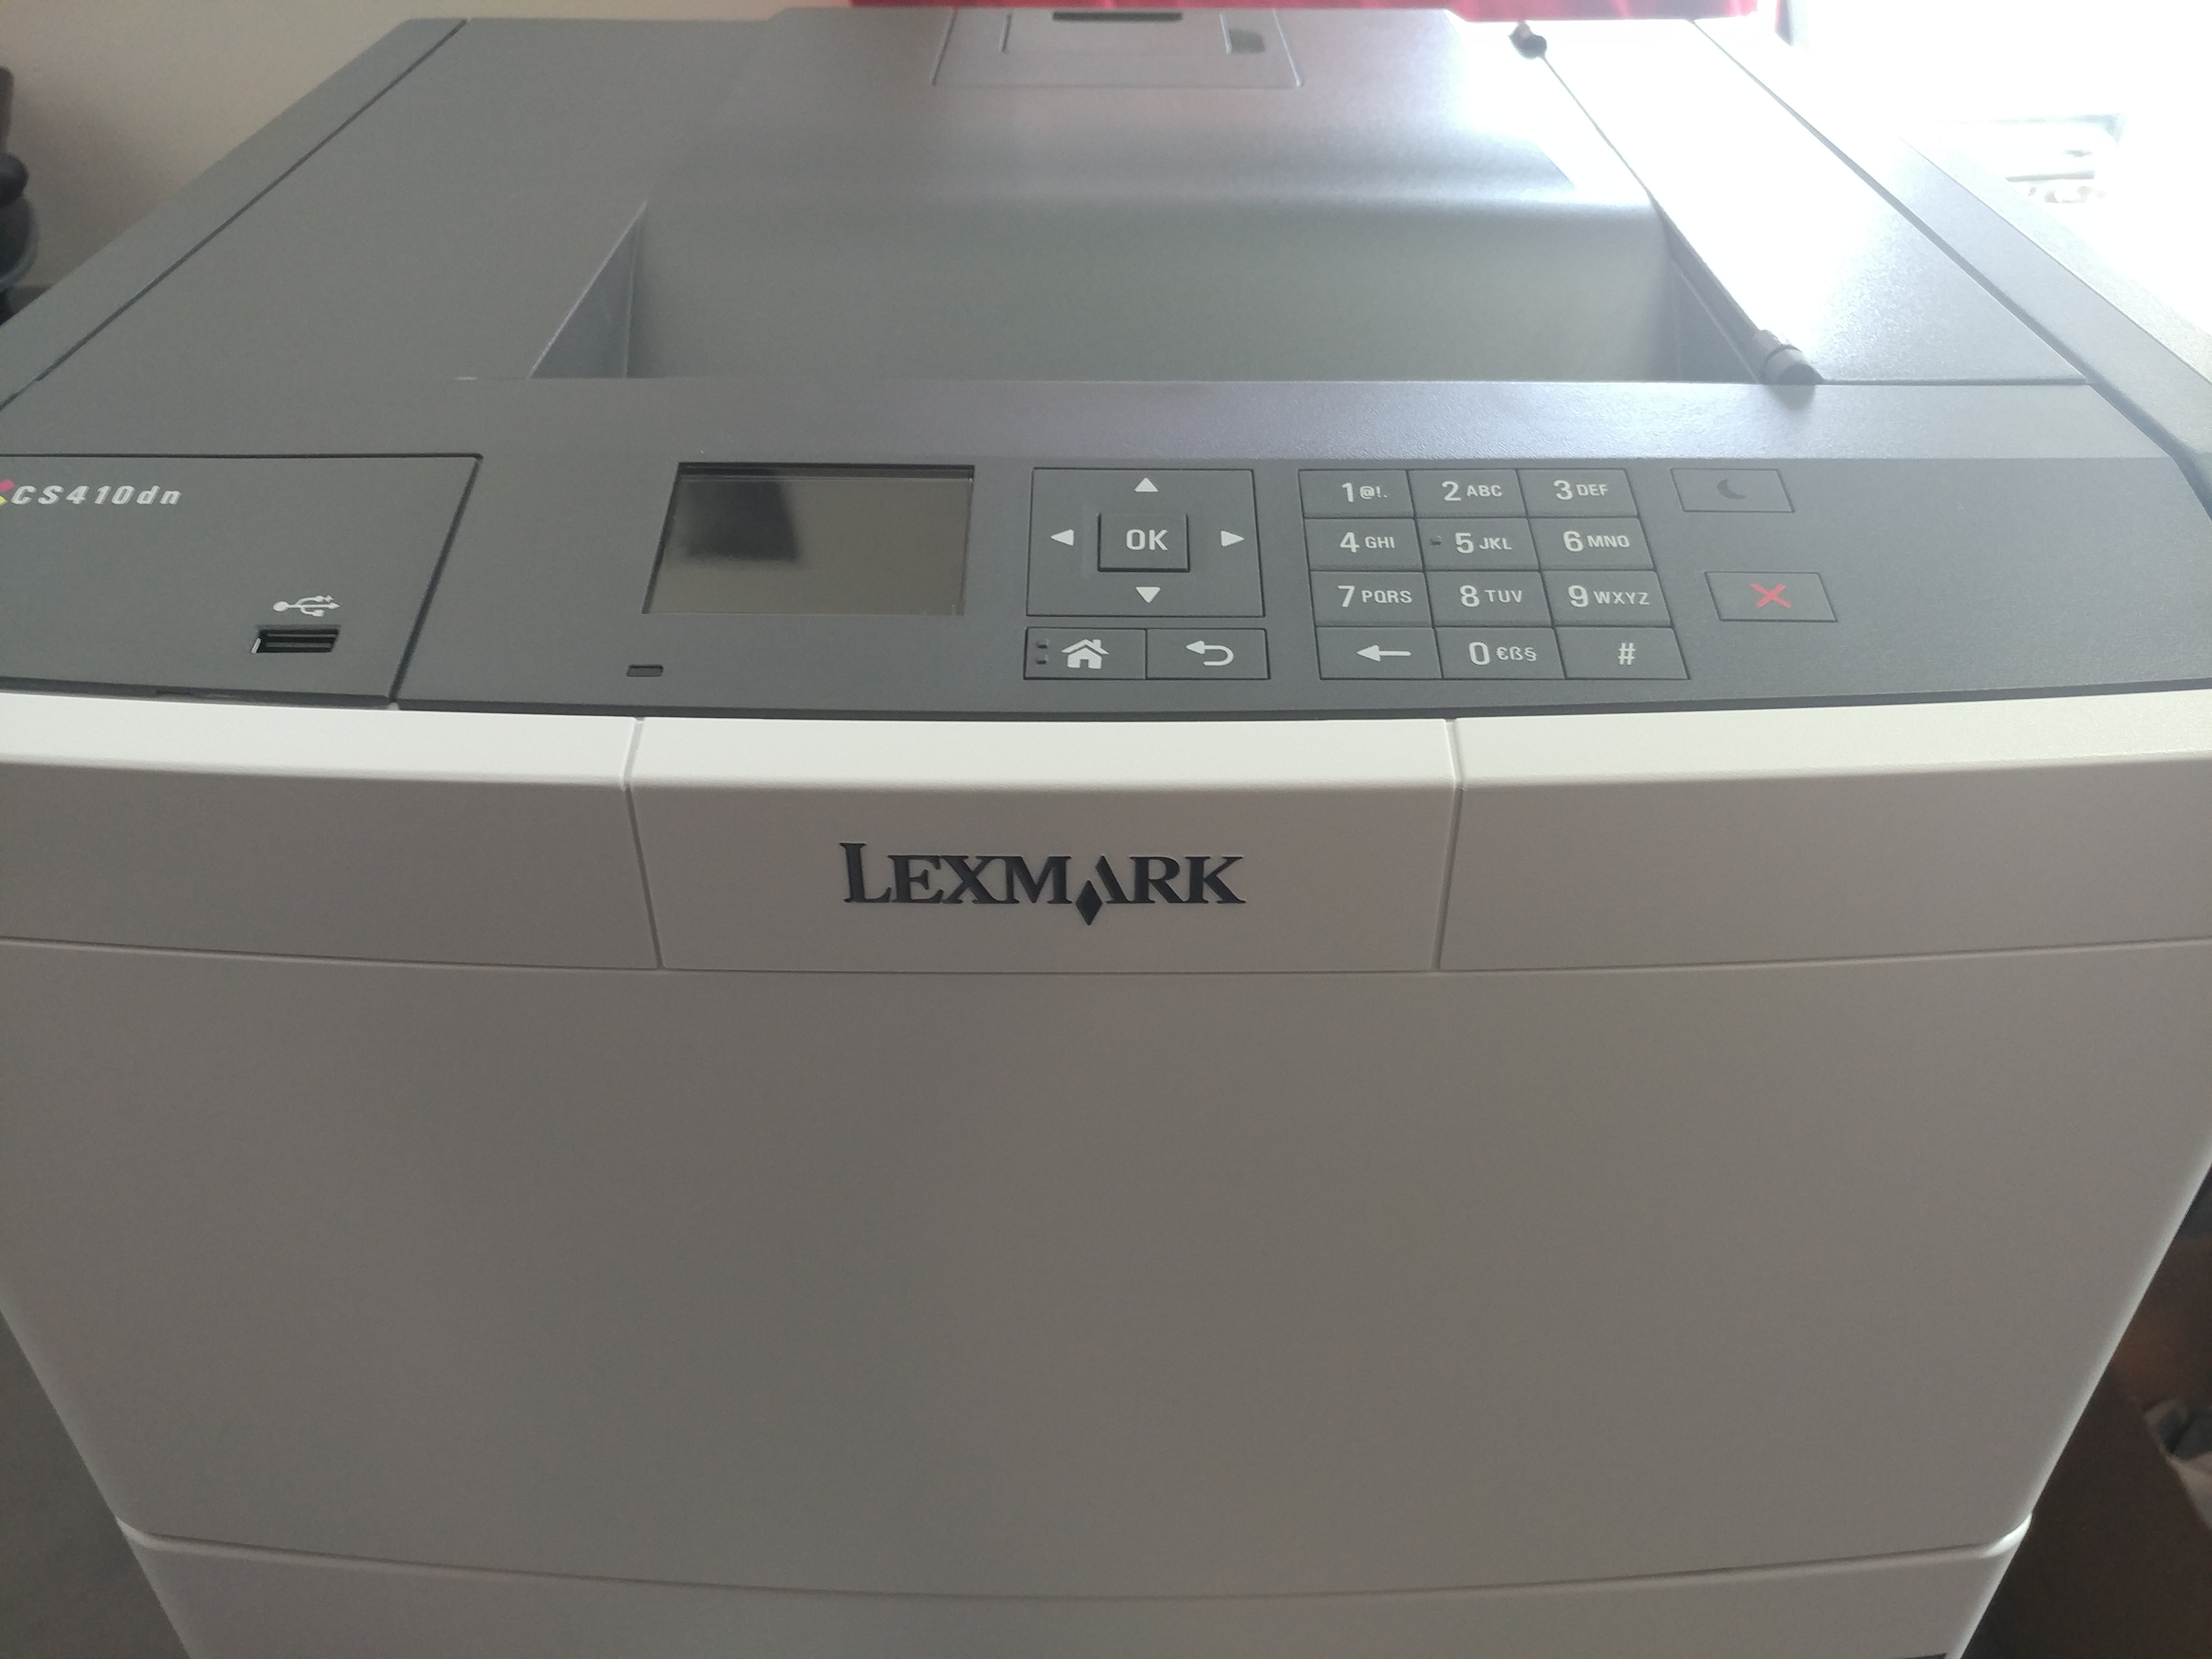 Lexmark printer setup